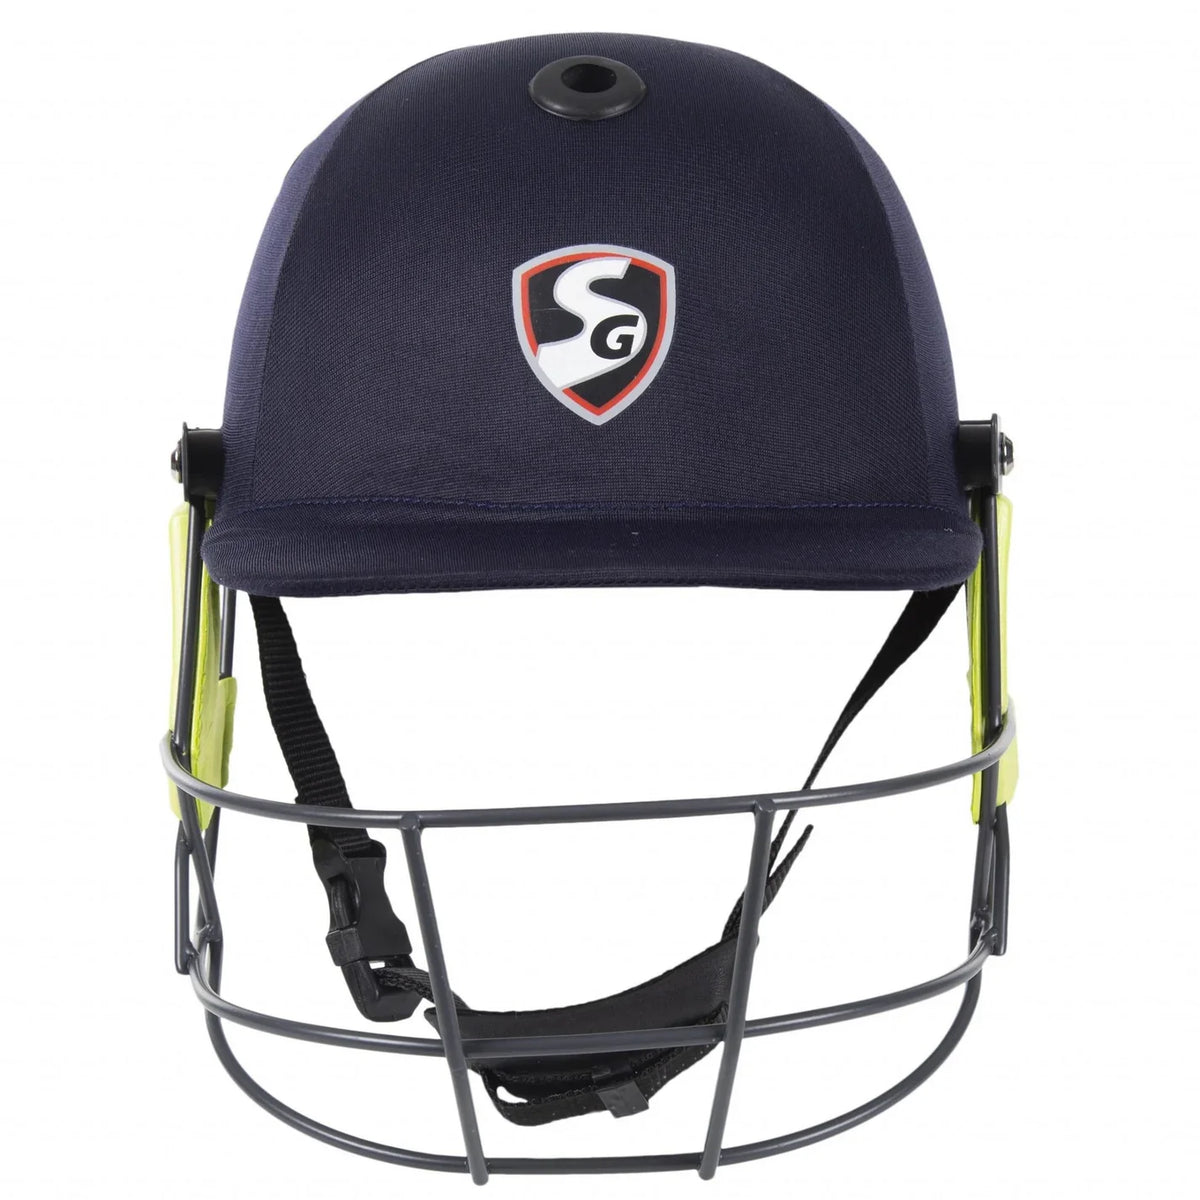 Pre-Order SG Aerotech 2.0 Cricket Helmet